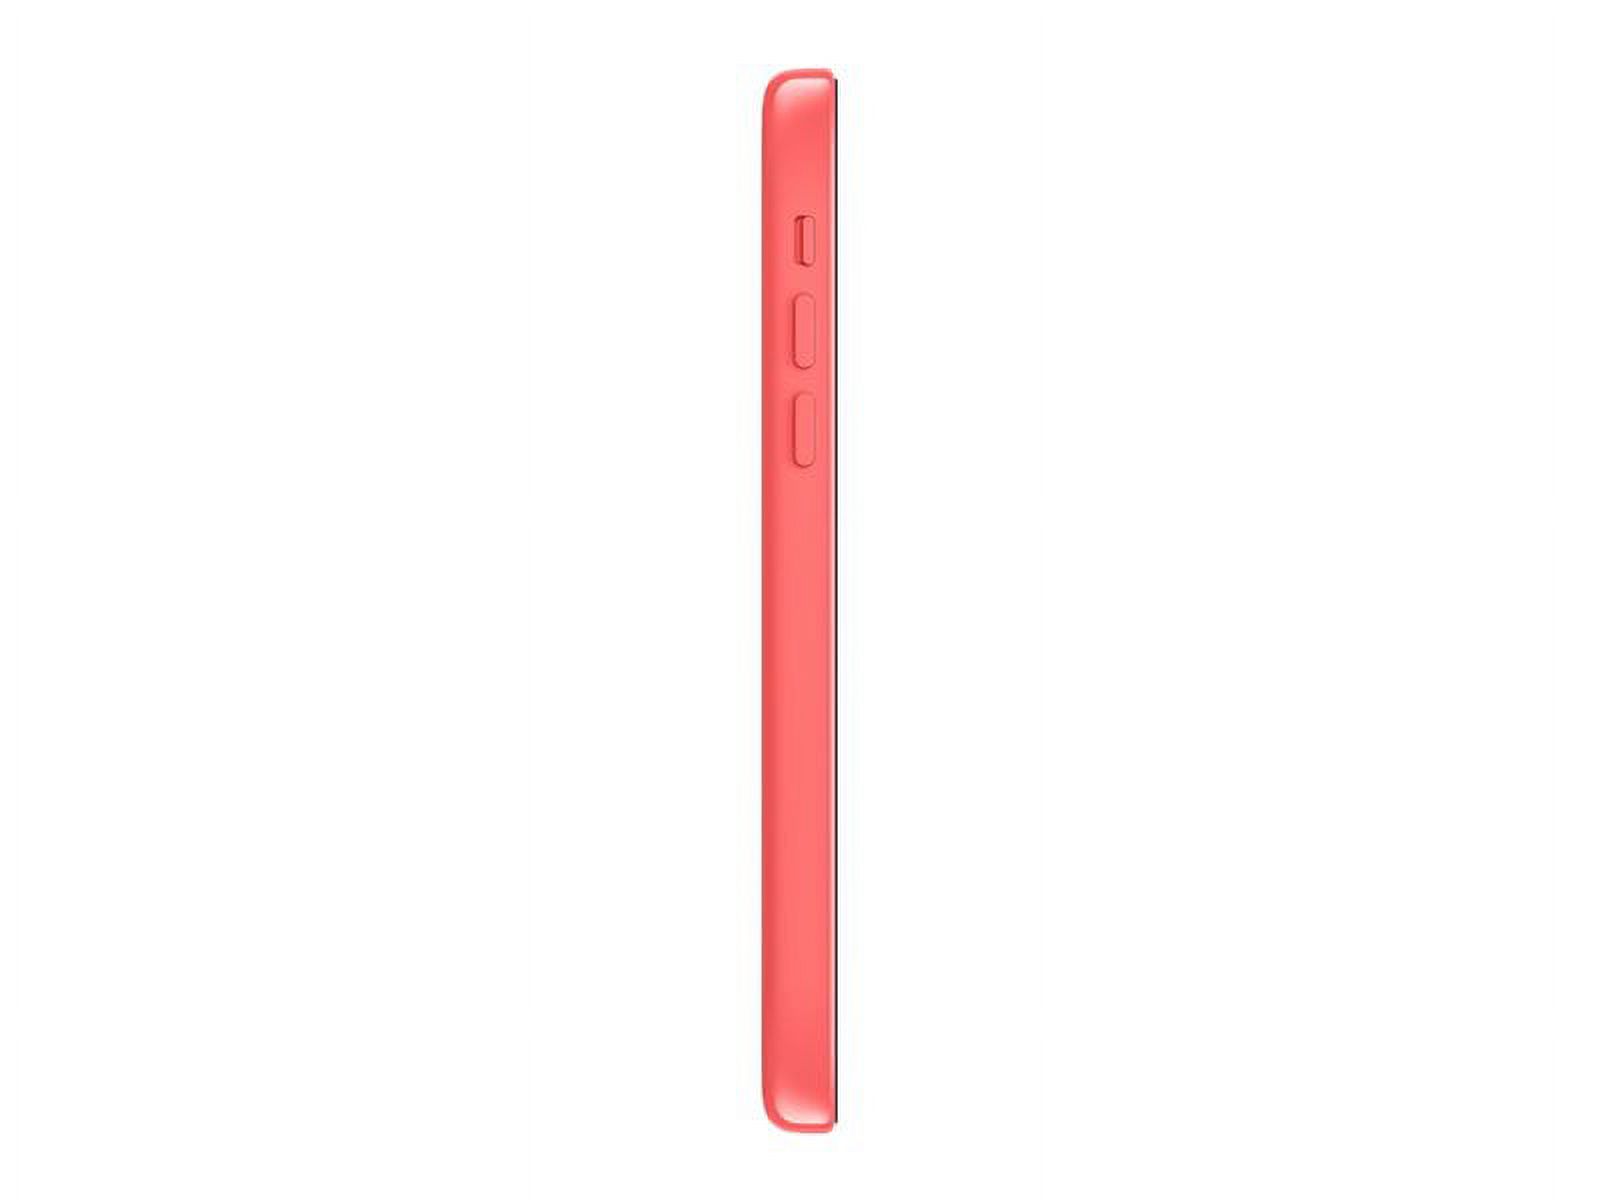 Restored Apple iPhone 5c 8GB, Pink - Unlocked (Refurbished) - image 5 of 8